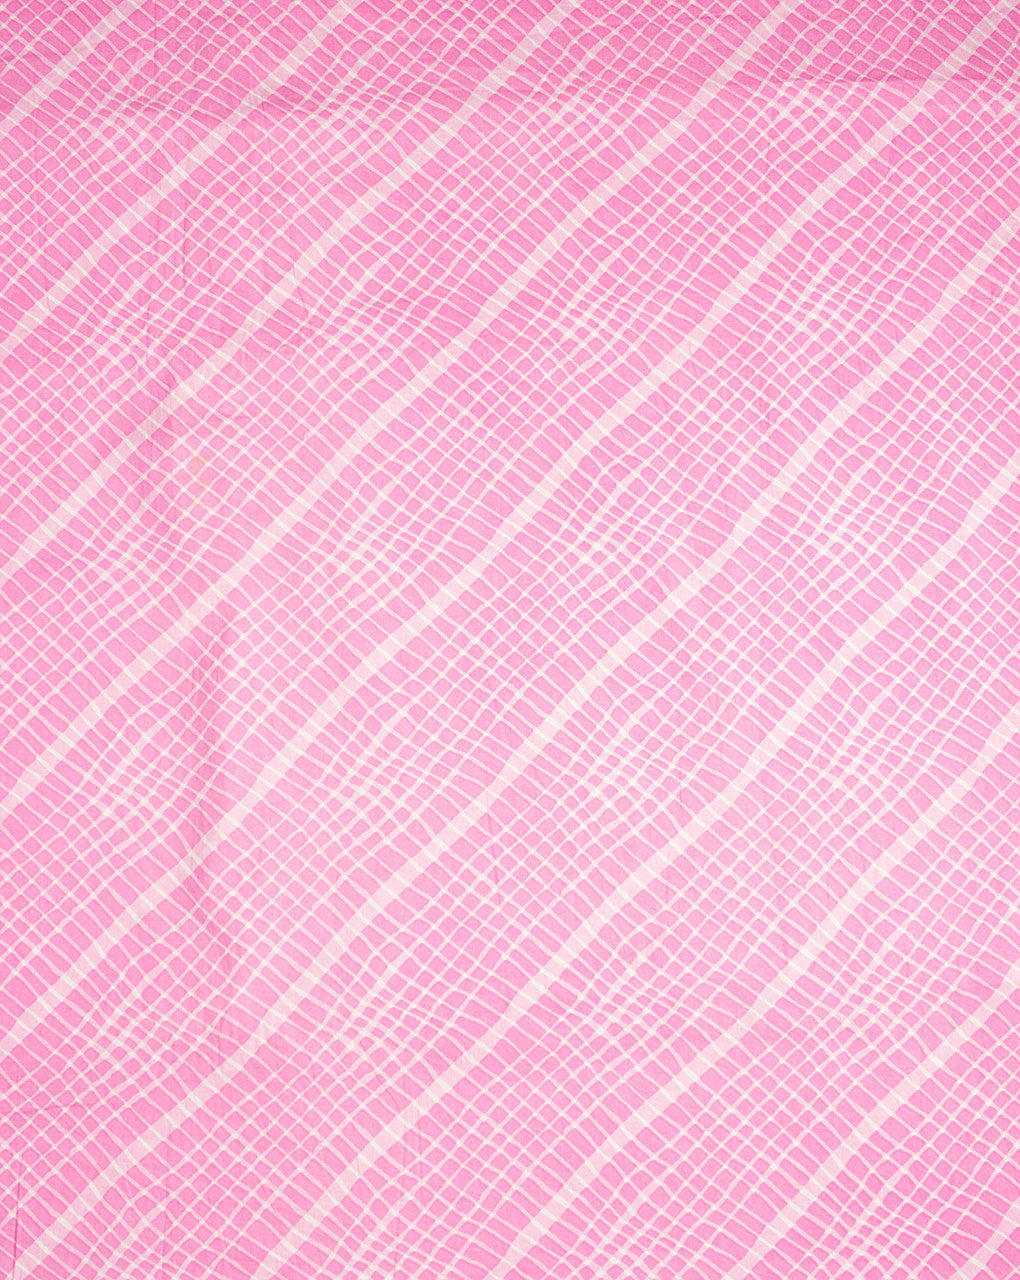 Leheriya Screen Print Cotton Fabric - Fabriclore.com